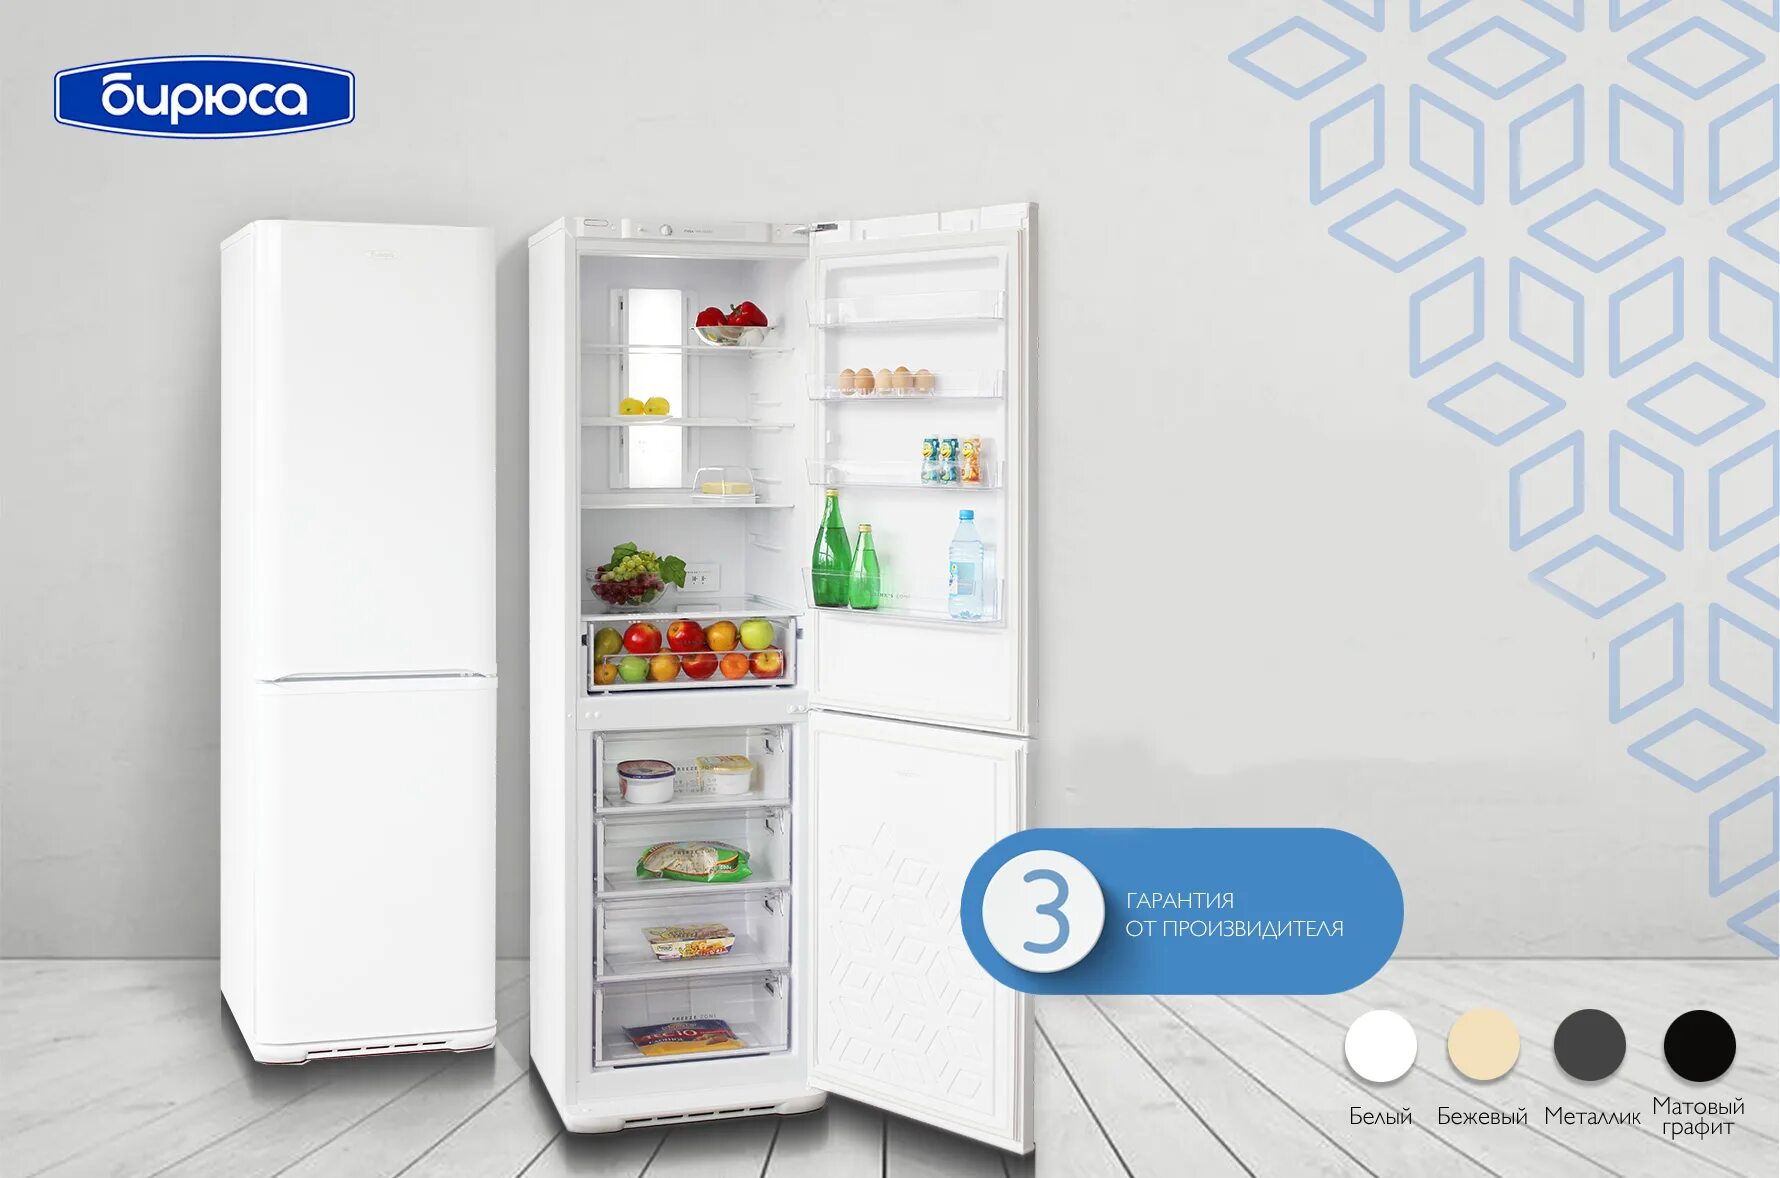 Атлант бирюса. Холодильник Бирюса двухкамерный ноу Фрост. Холодильник Бирюса no Frost. Холодильник Бирюса 1.5 метра двухкамерный. Холодильник Бирюса двухкамерный с системой ноу Фрост.